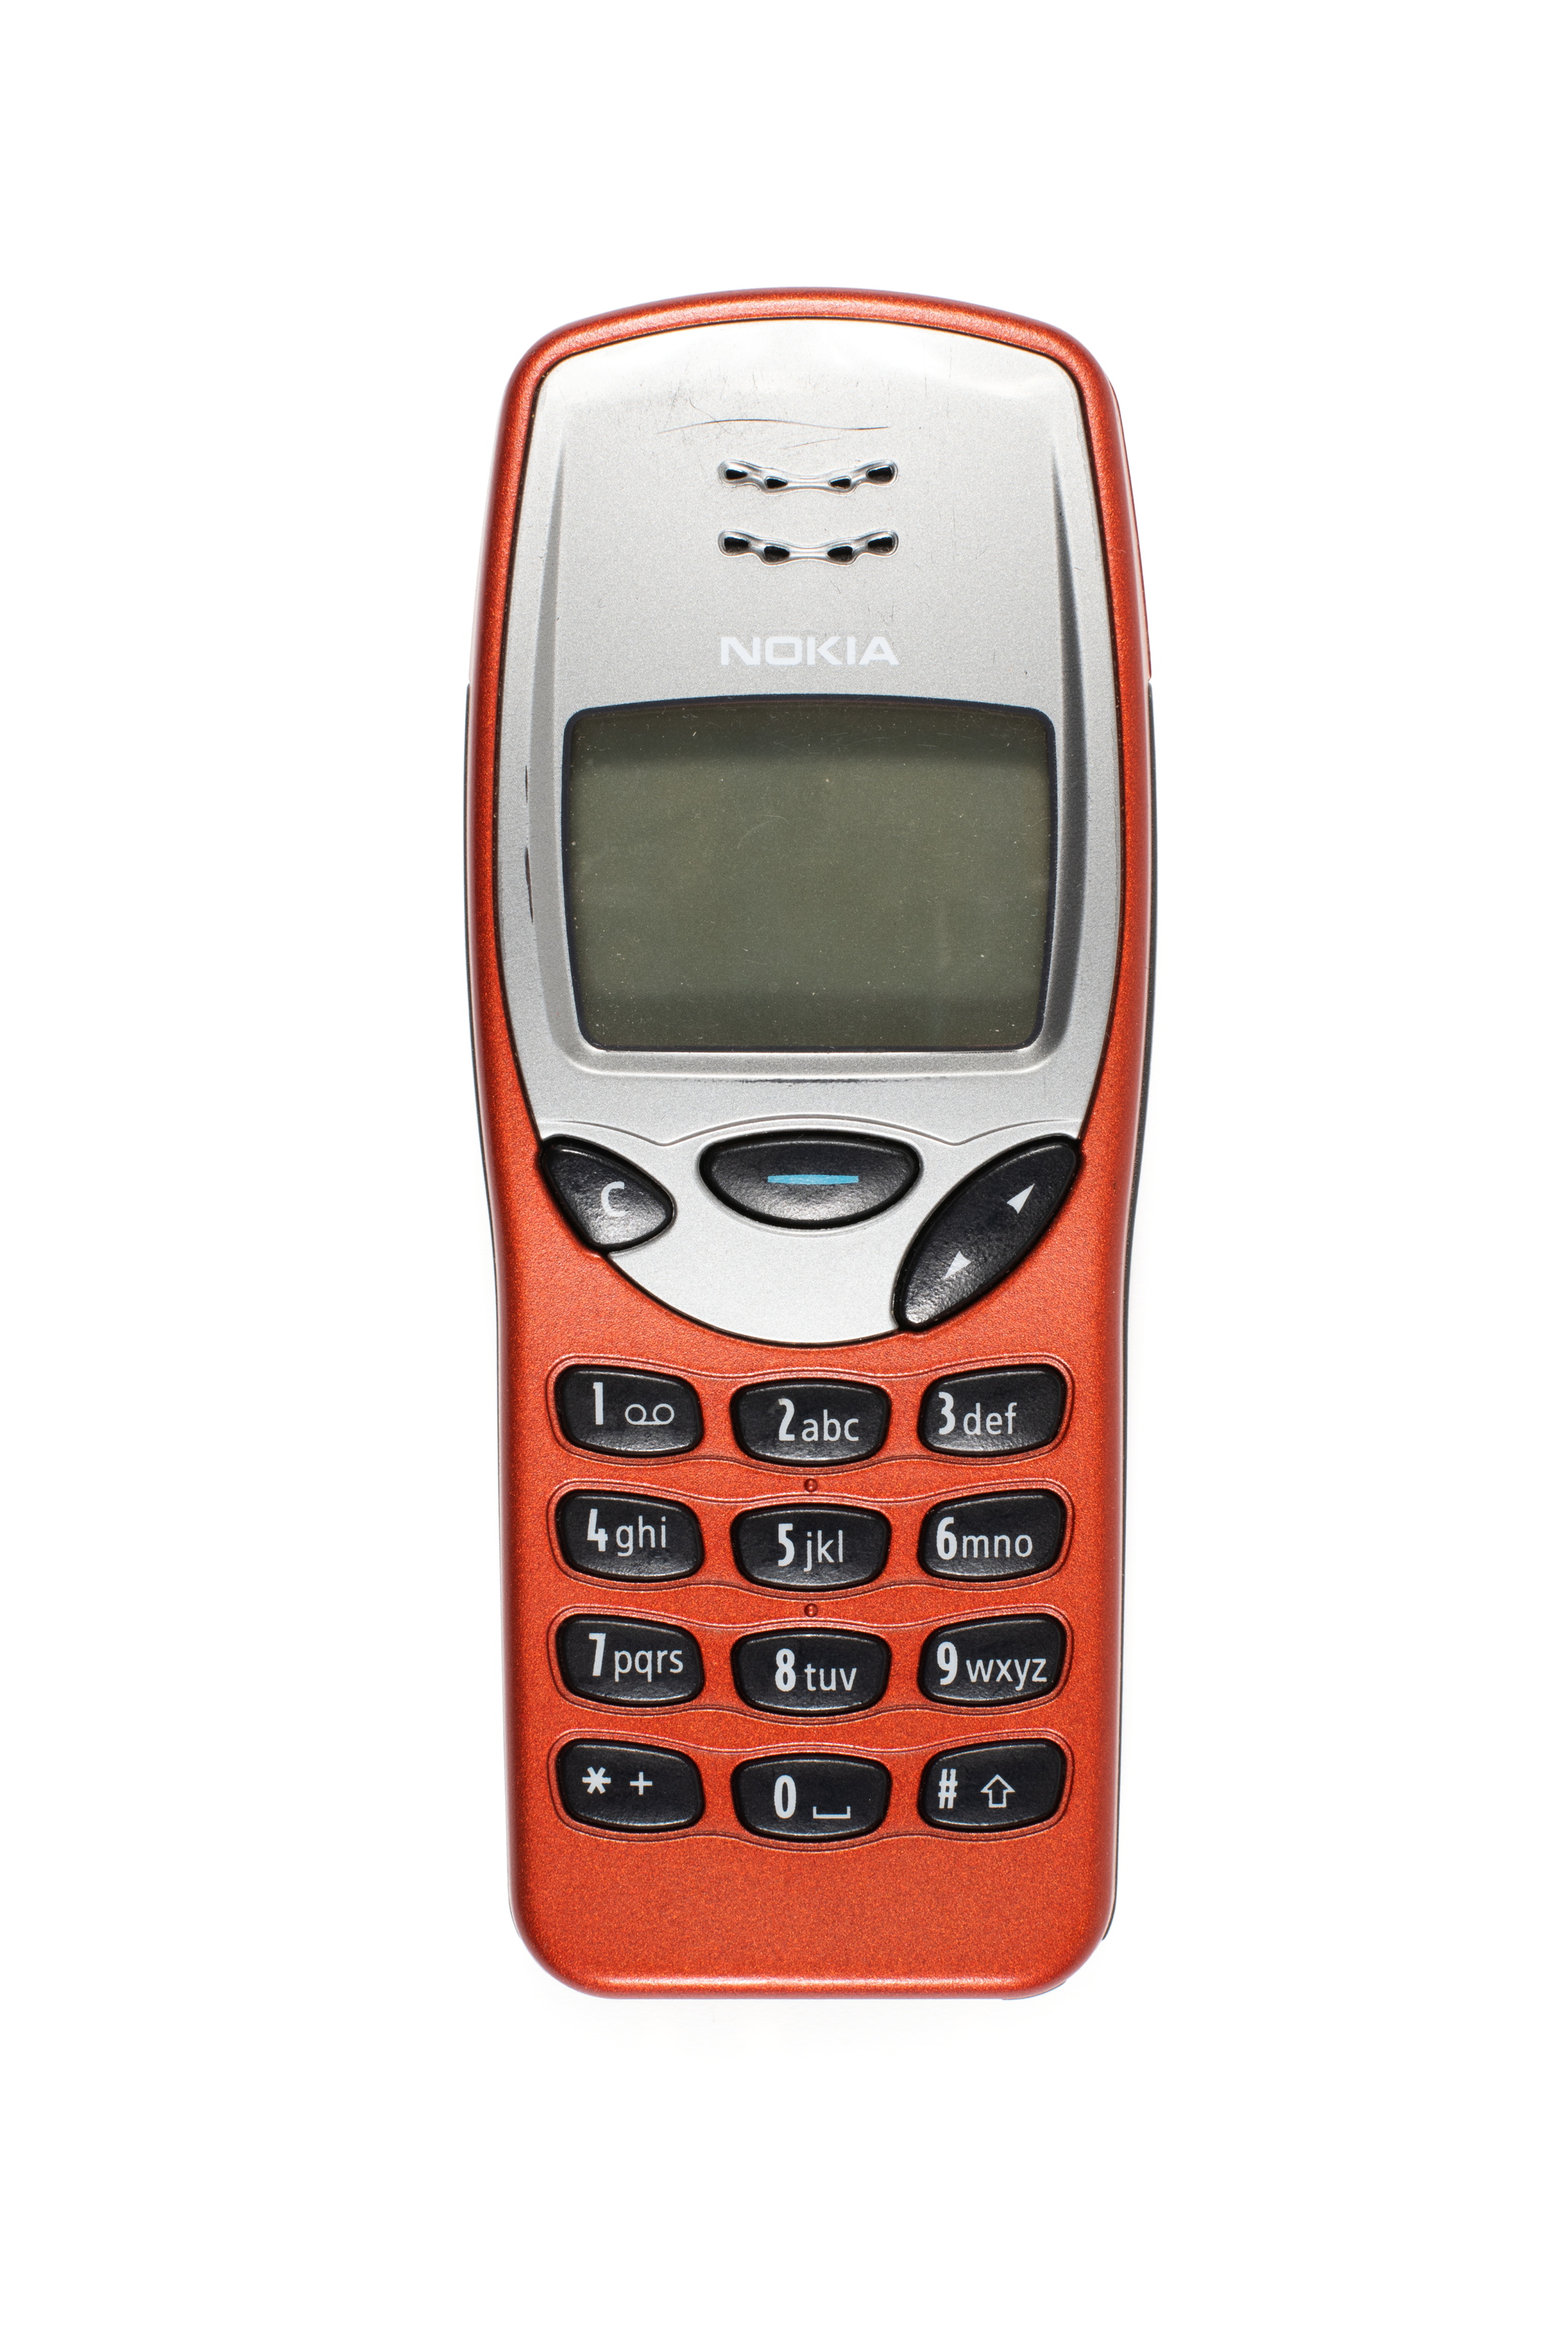 '3210' model Nokia mobile telephone